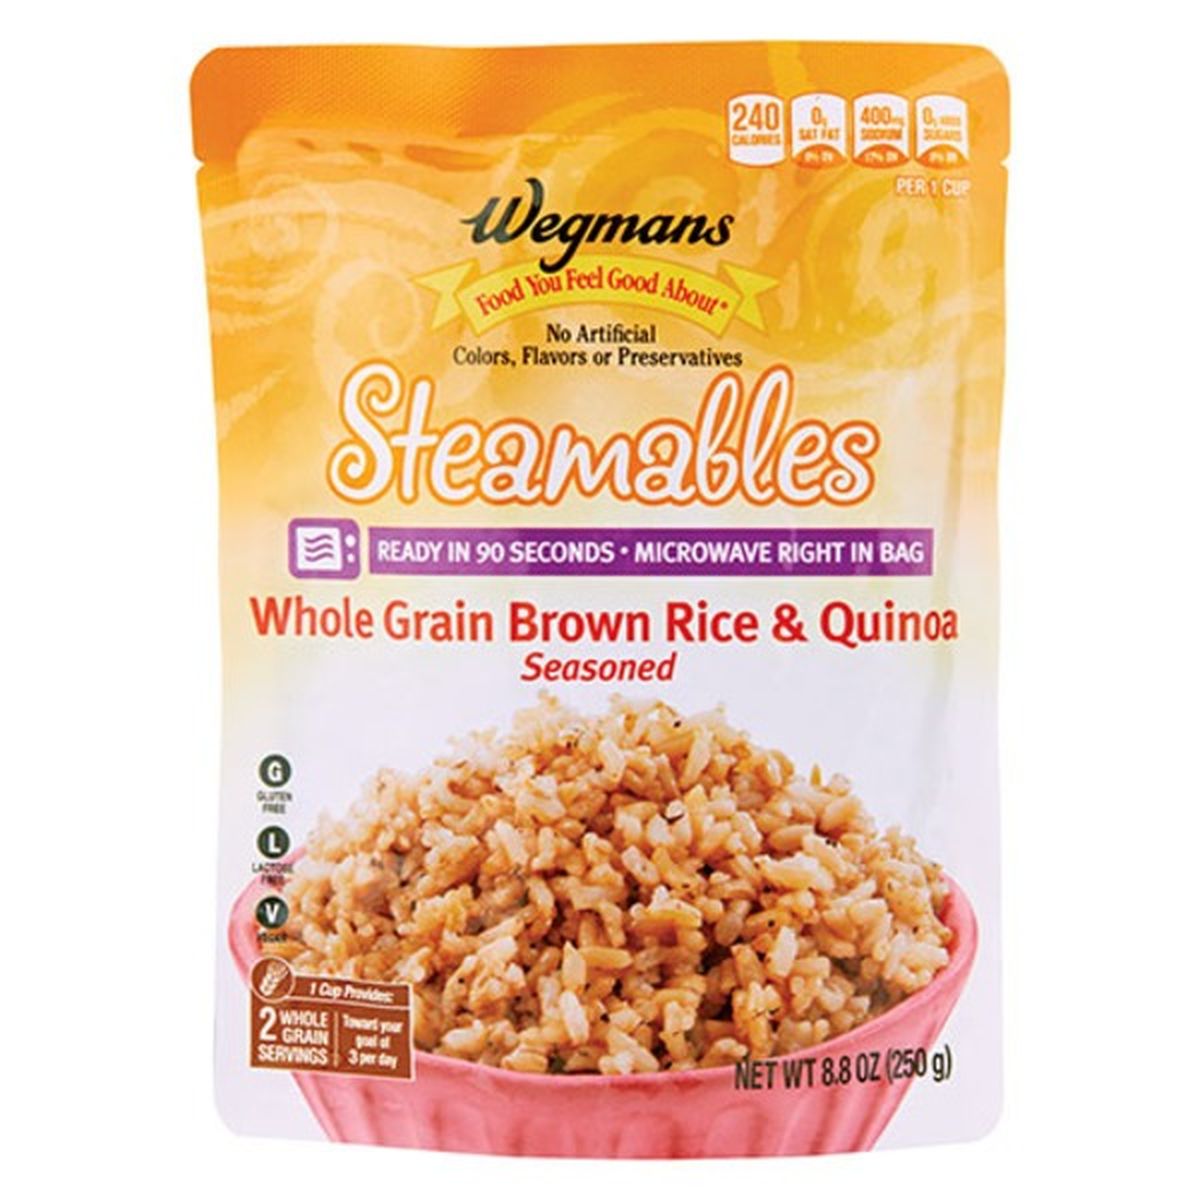 Calories in Wegmans Whole Grain Brown Rice & Quinoa Steamables